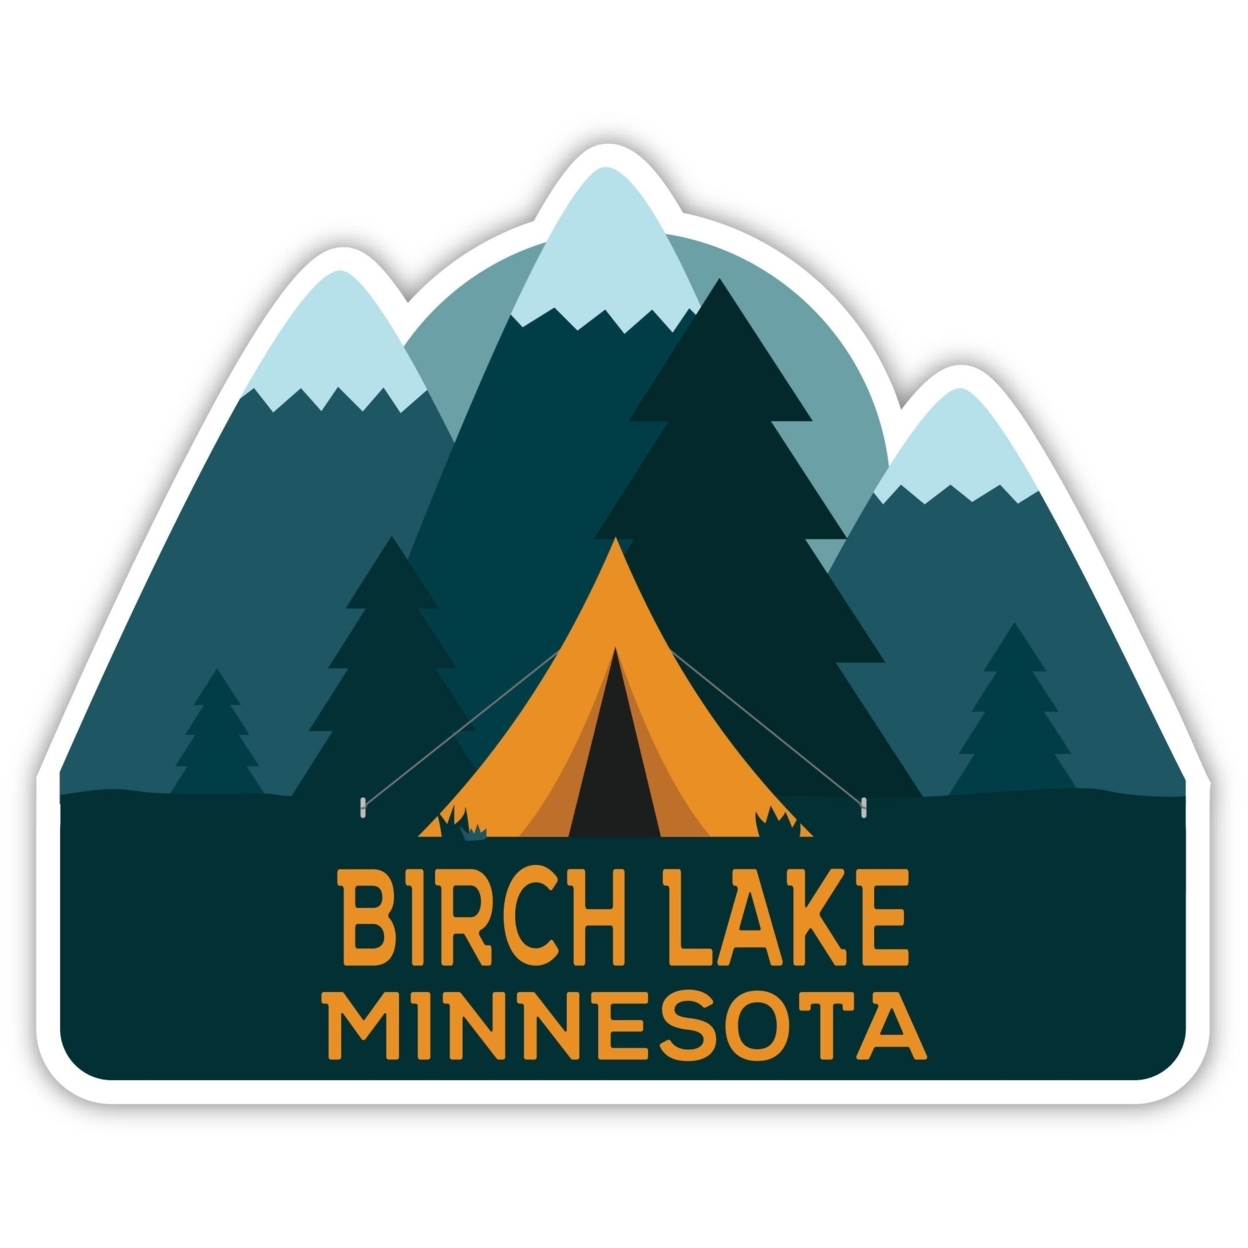 Birch Lake Minnesota Souvenir Decorative Stickers (Choose Theme And Size) - 4-Pack, 2-Inch, Tent